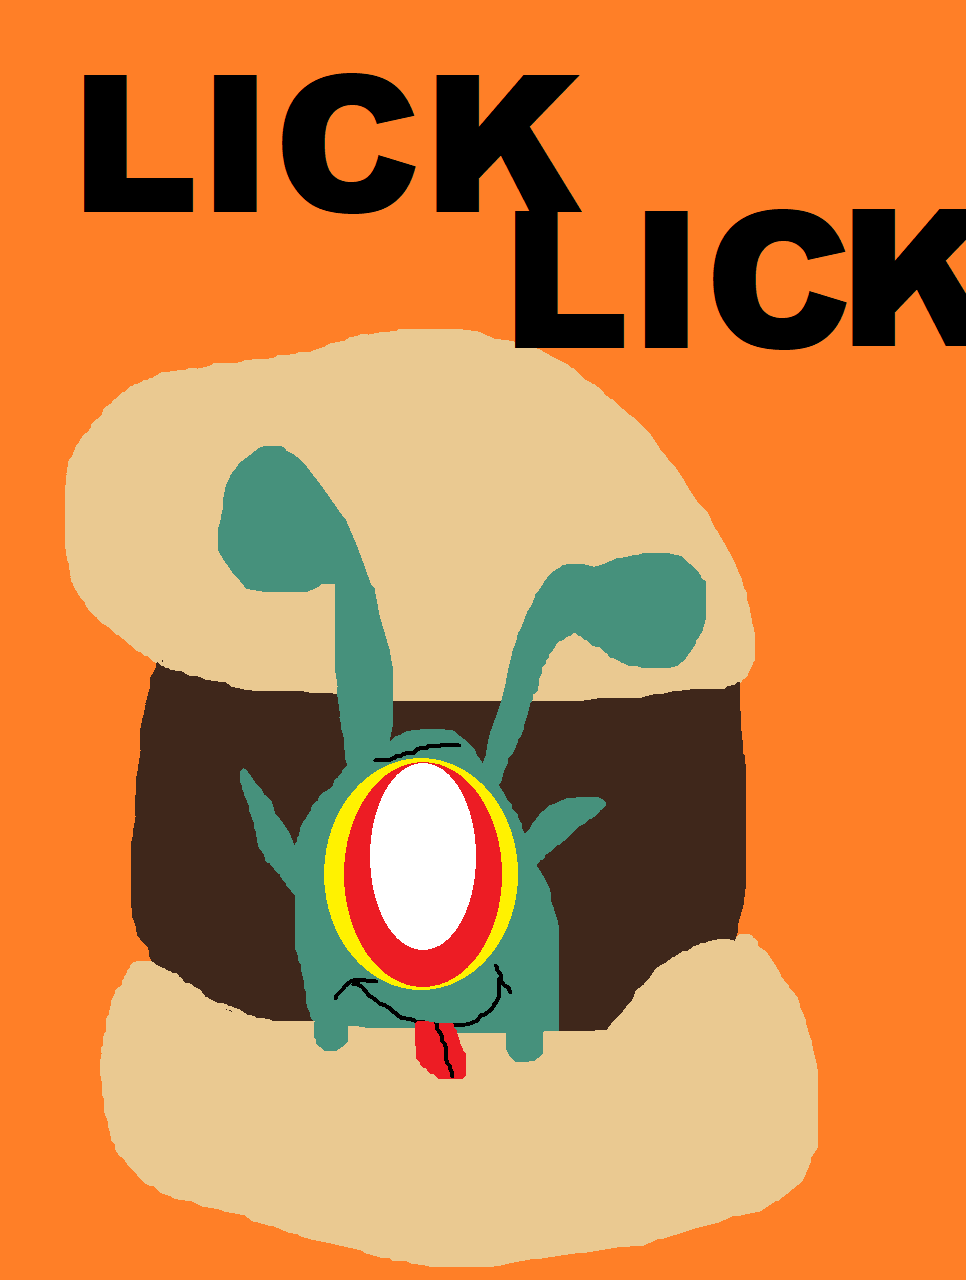 Burger Lick by Falconlobo